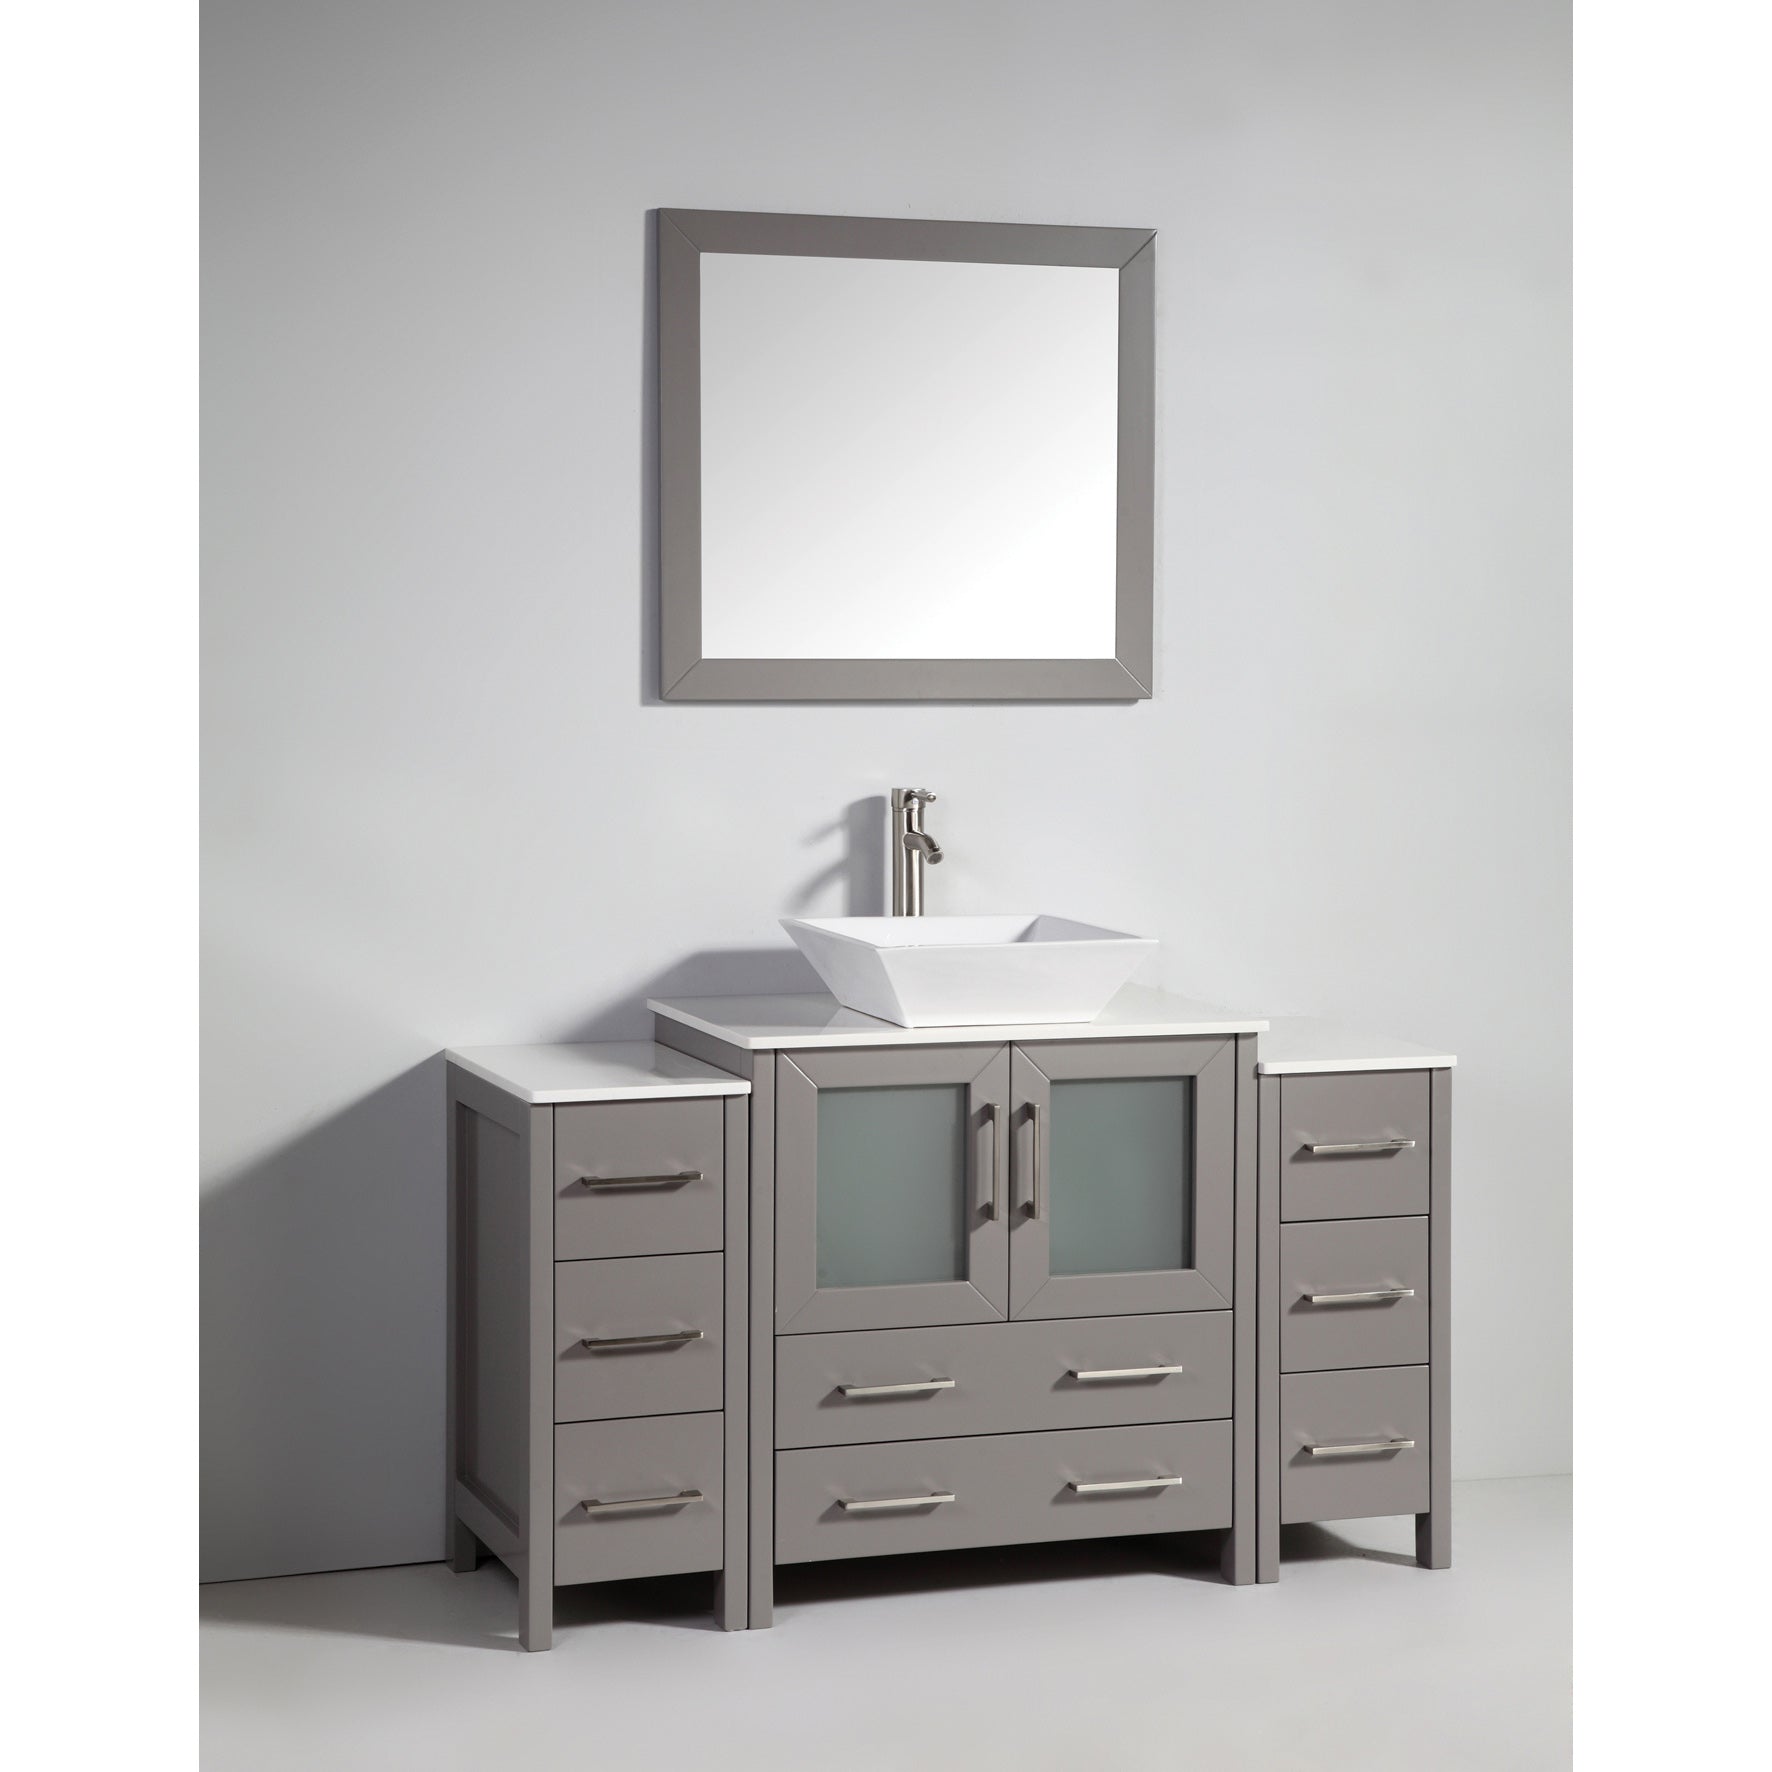 Vanity Art 54" Single Sink Vanity – White Ceramic Vanity Top with Single Basin Vanity Top in White Ceramic - VA3130-54